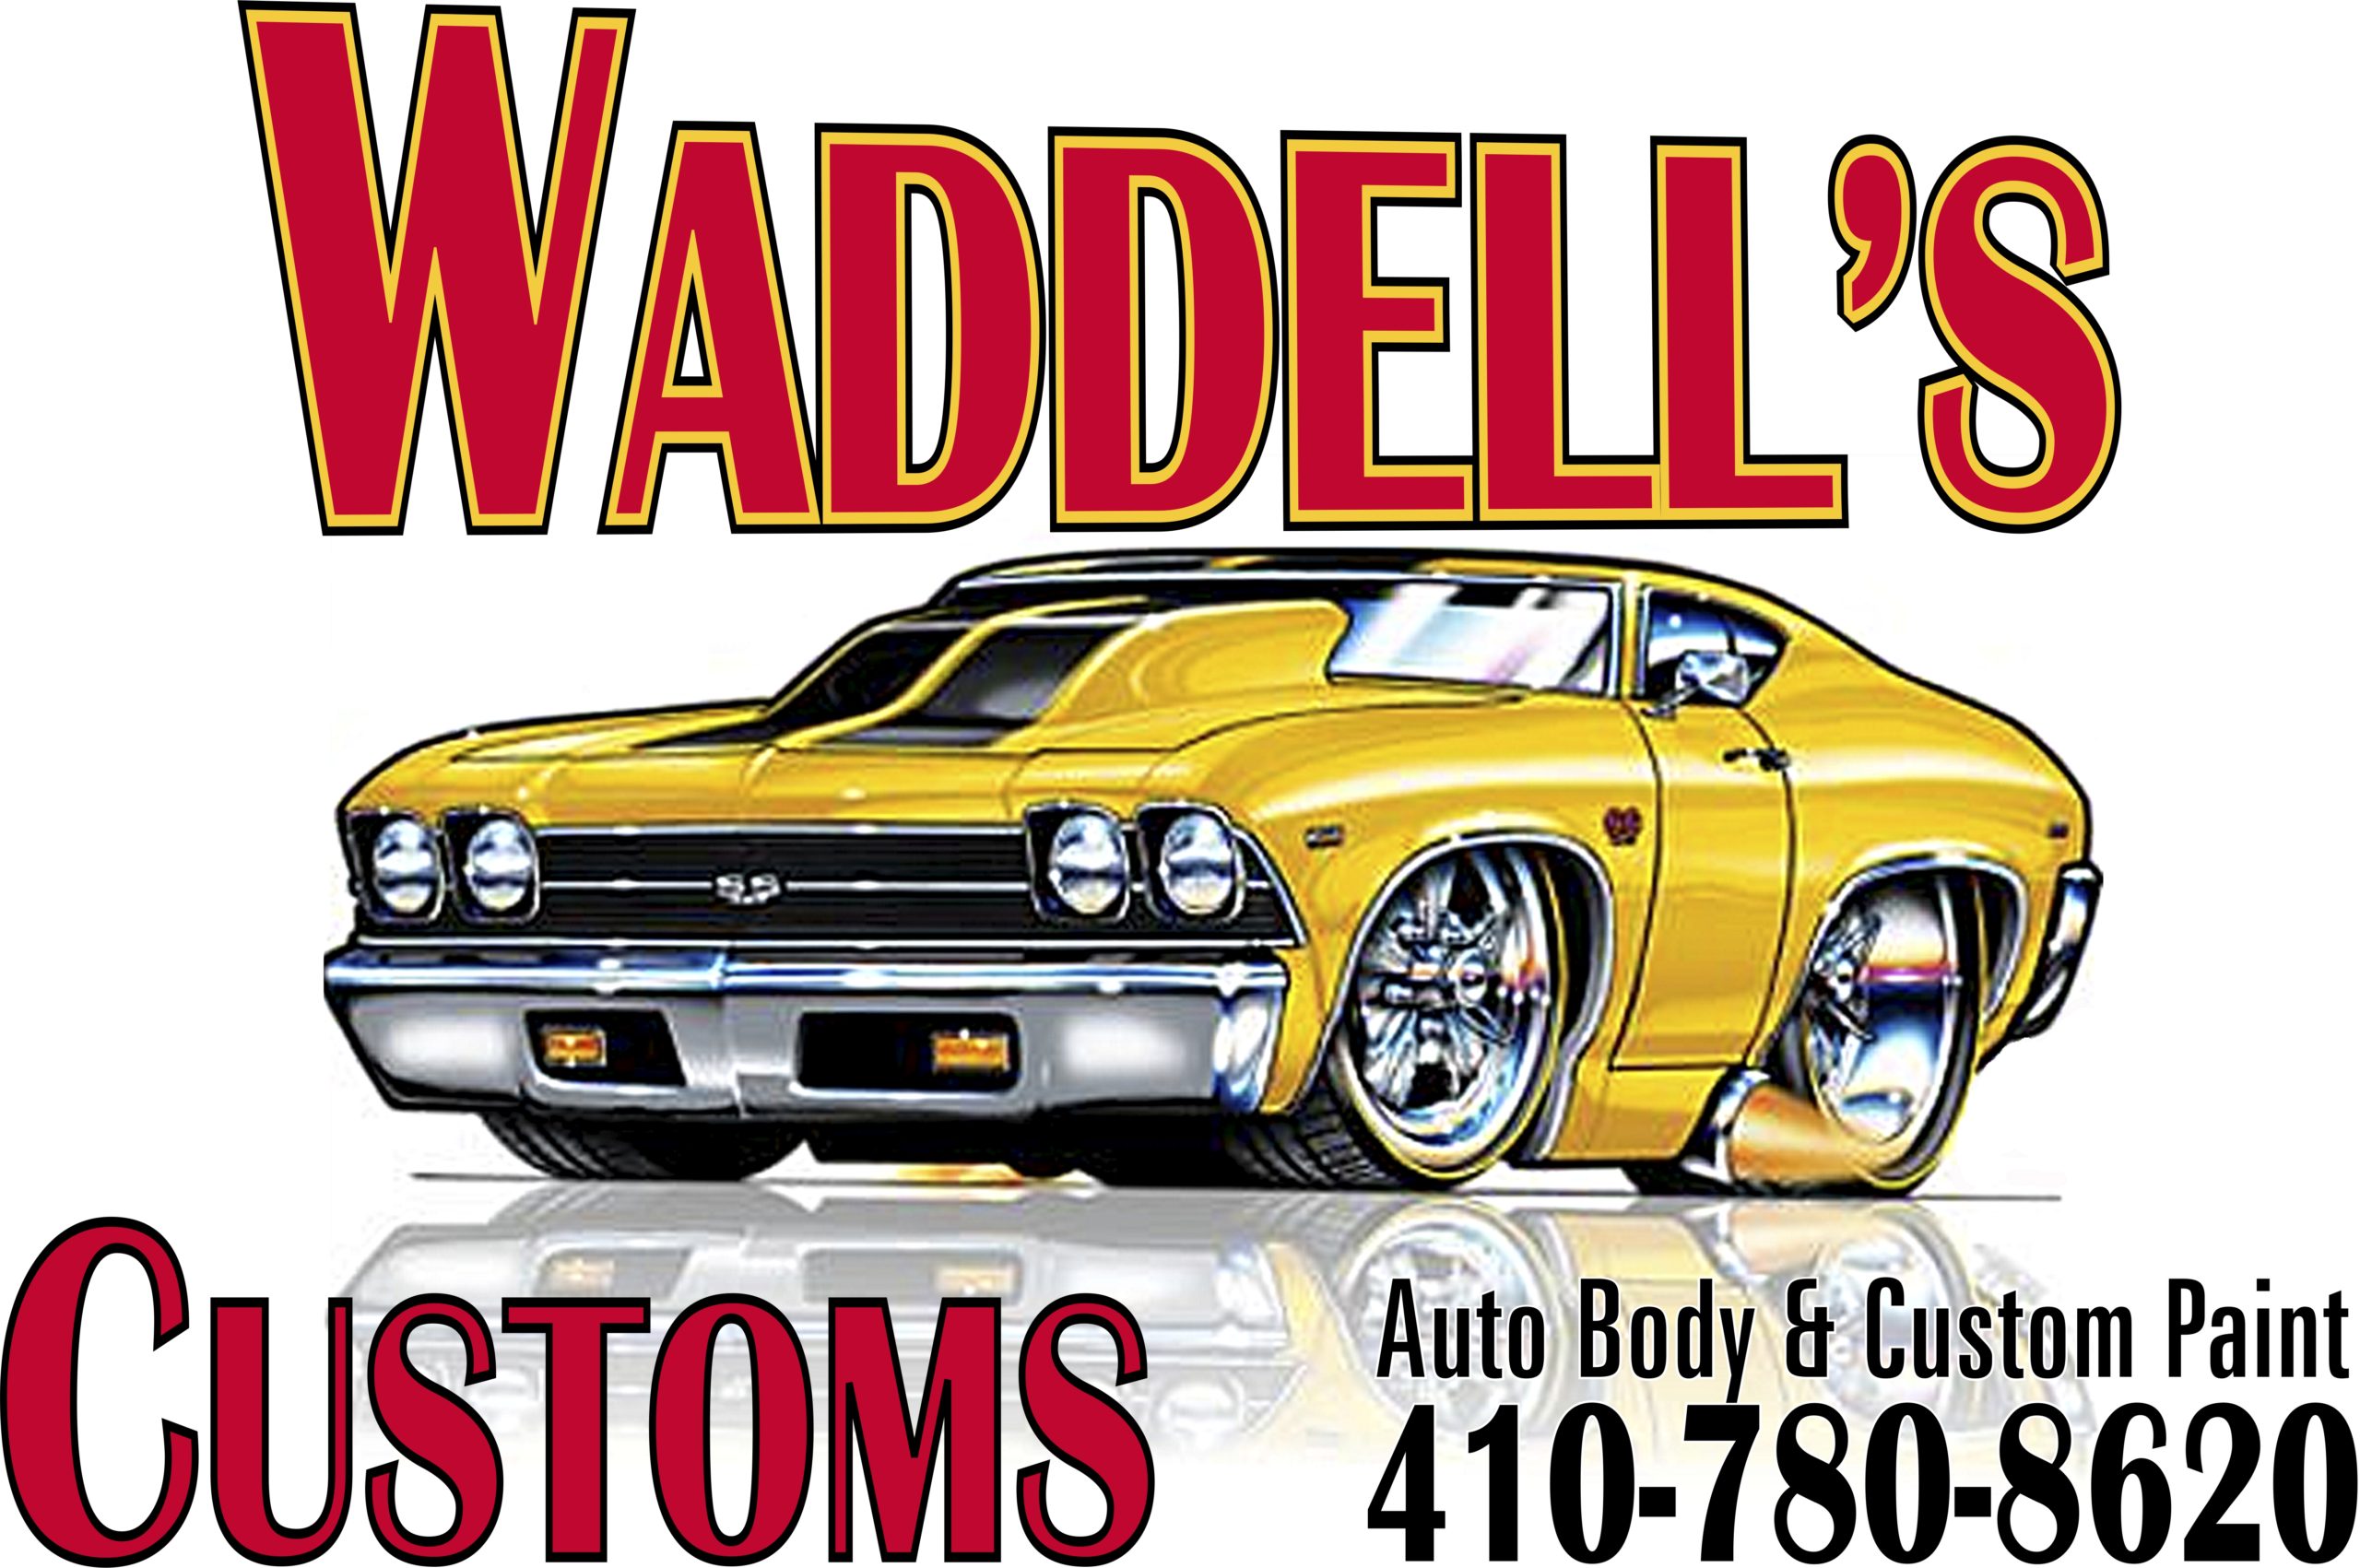 Waddell’s Customs LLC